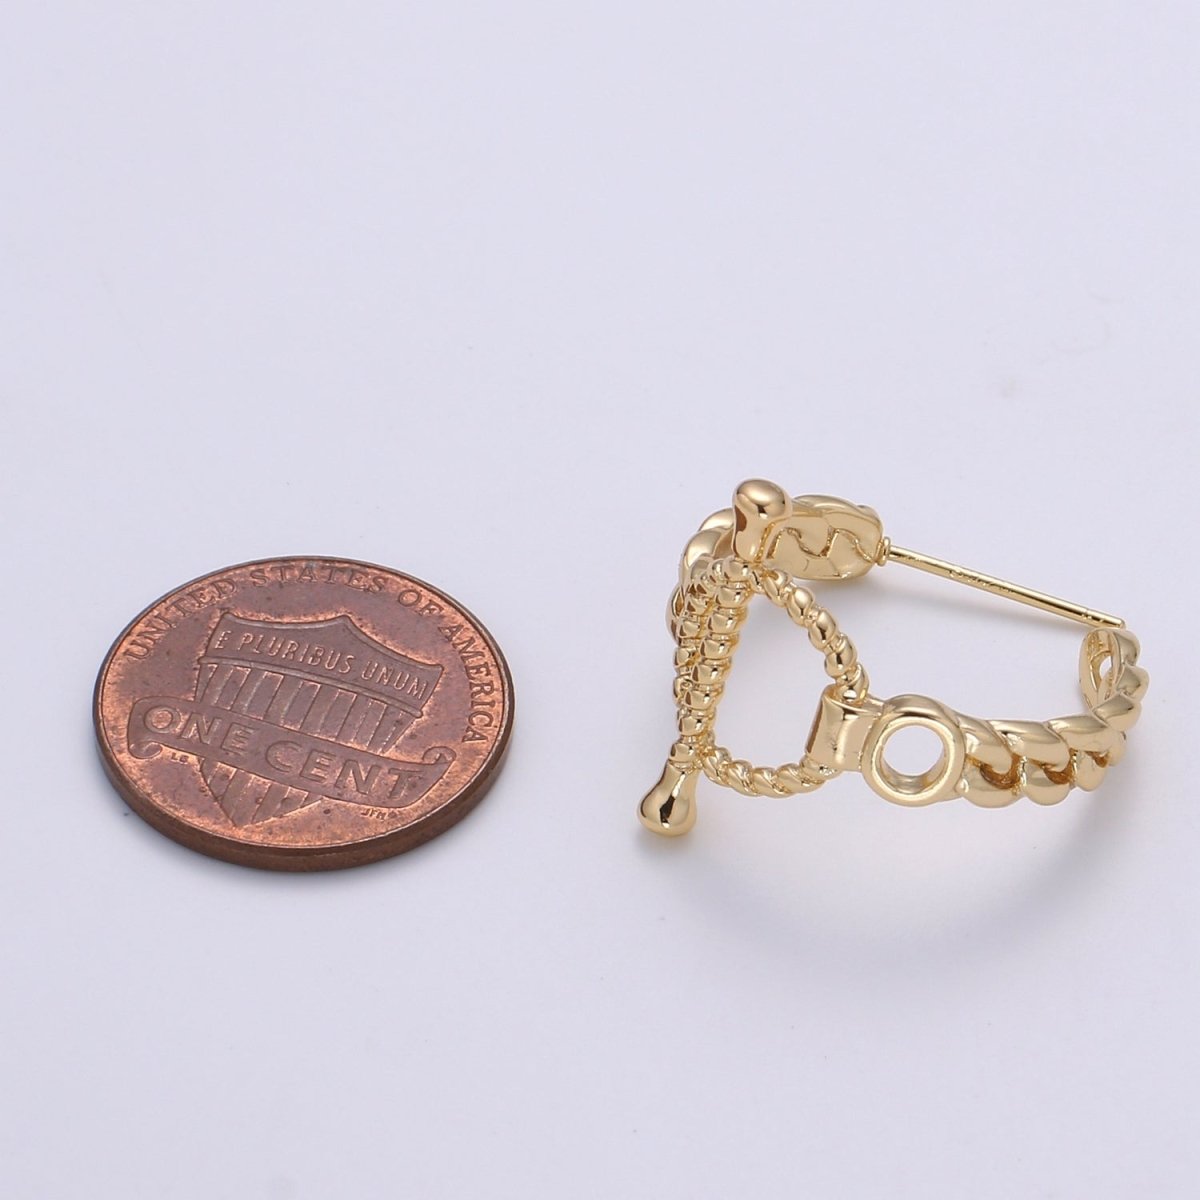 Gold Plated Link Chain Studs Earring Horseshoe, Plain Gold Earring Jewelry GP-898 - DLUXCA